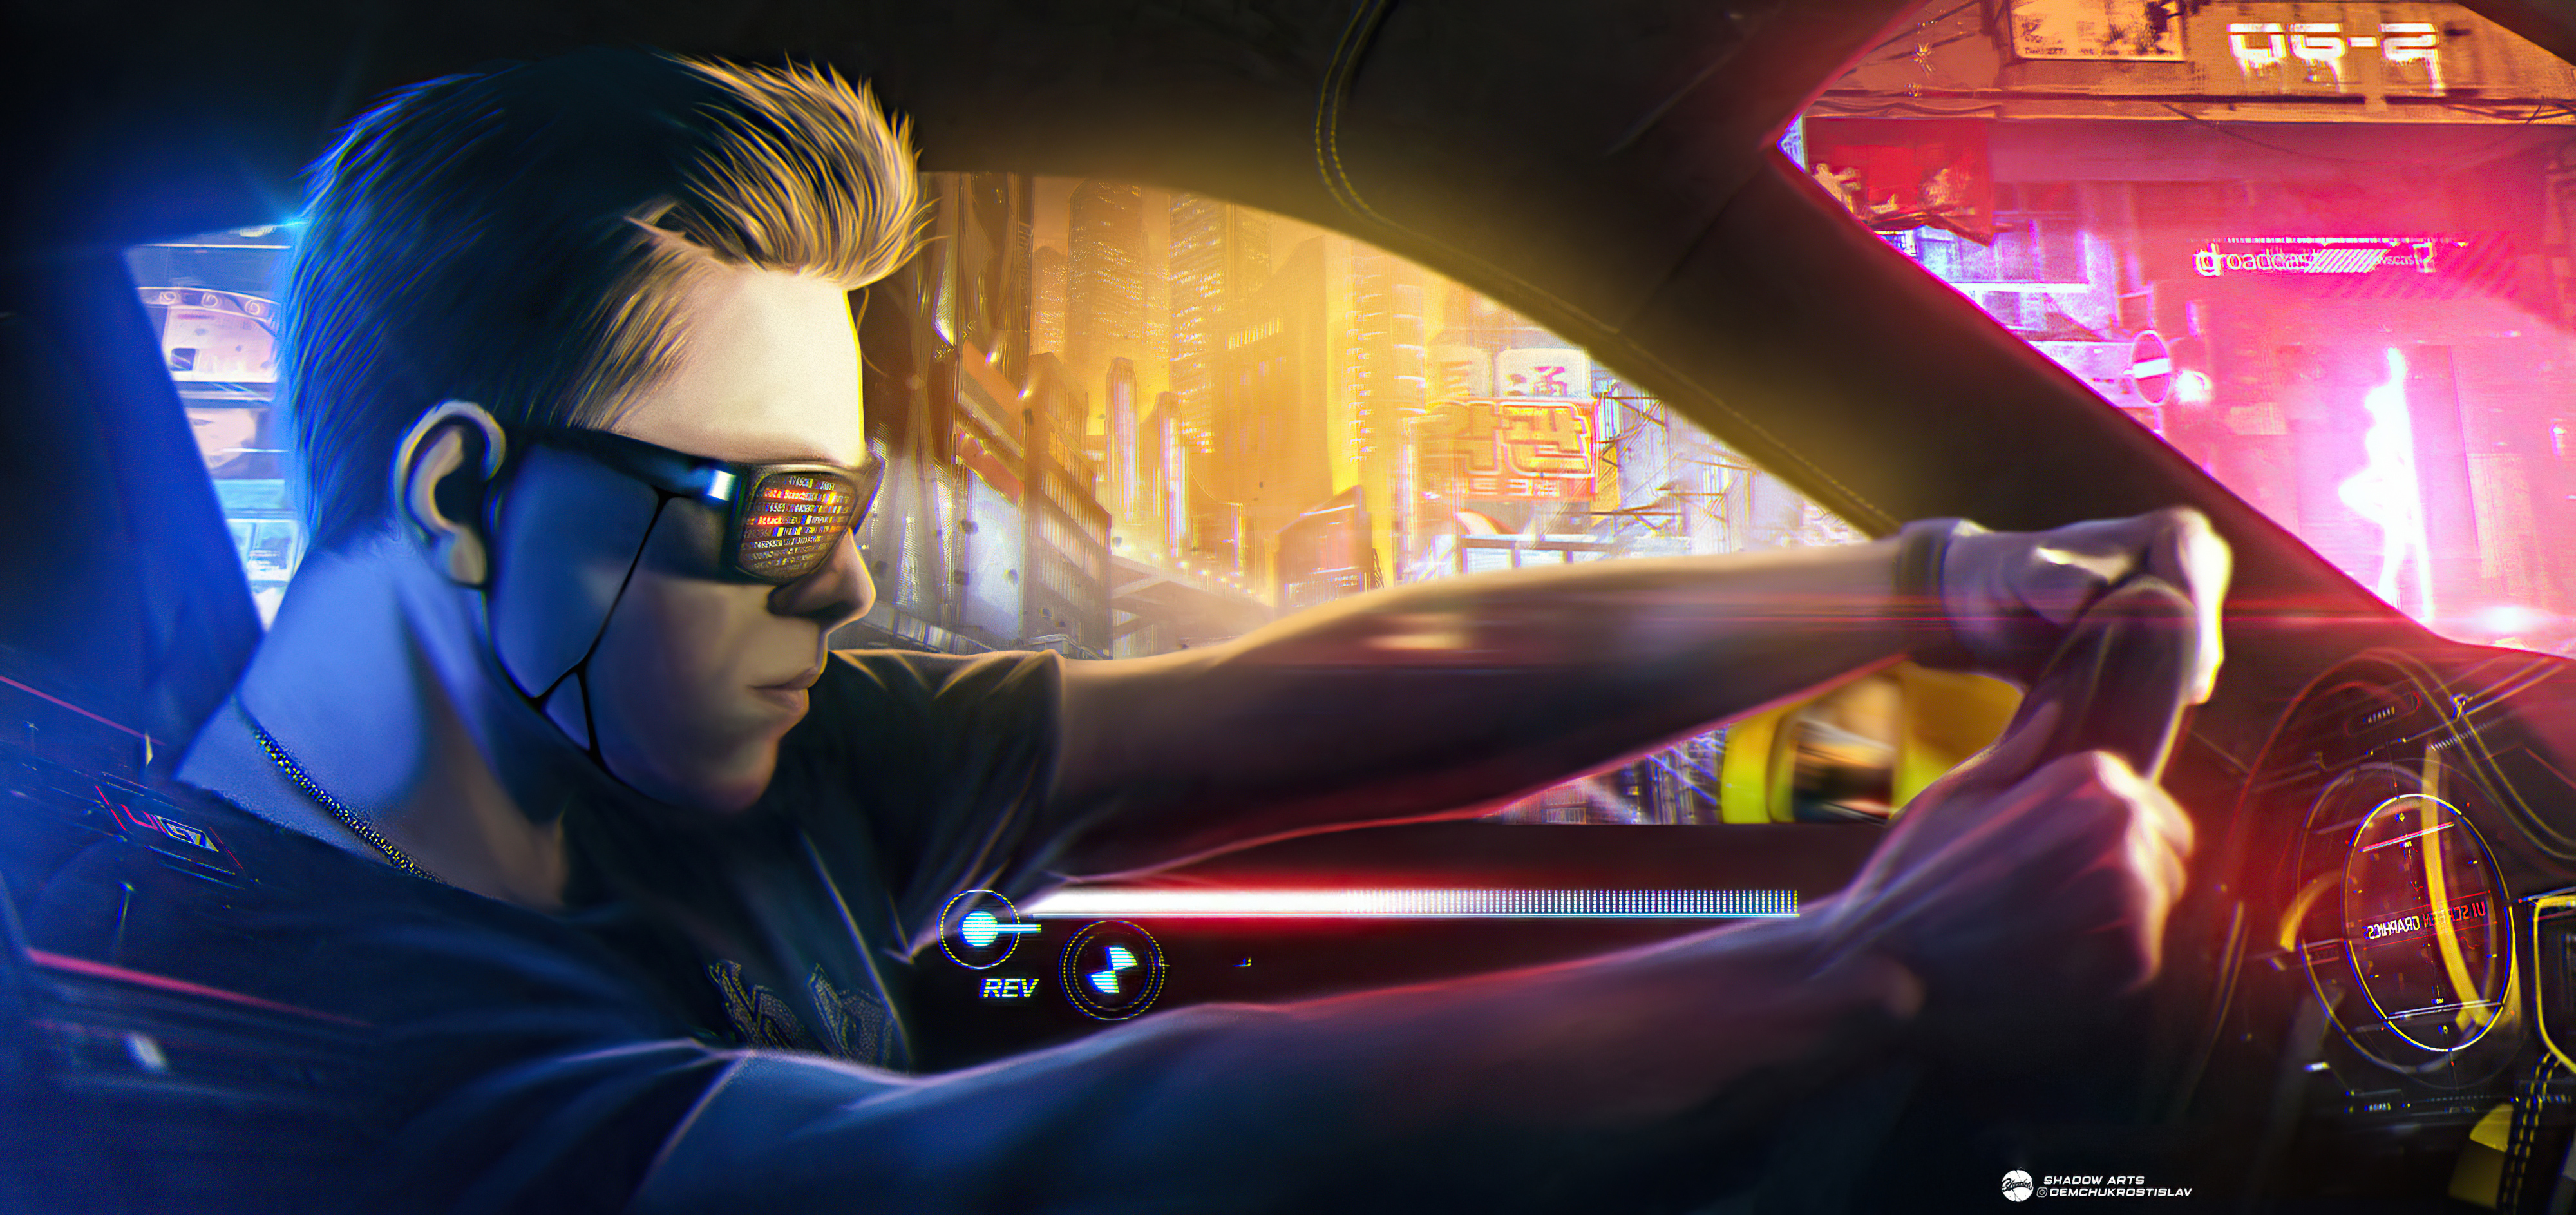 Cyberpunk Boy Car Rider 4k, HD Artist, 4k Wallpaper, Image, Background, Photo and Picture